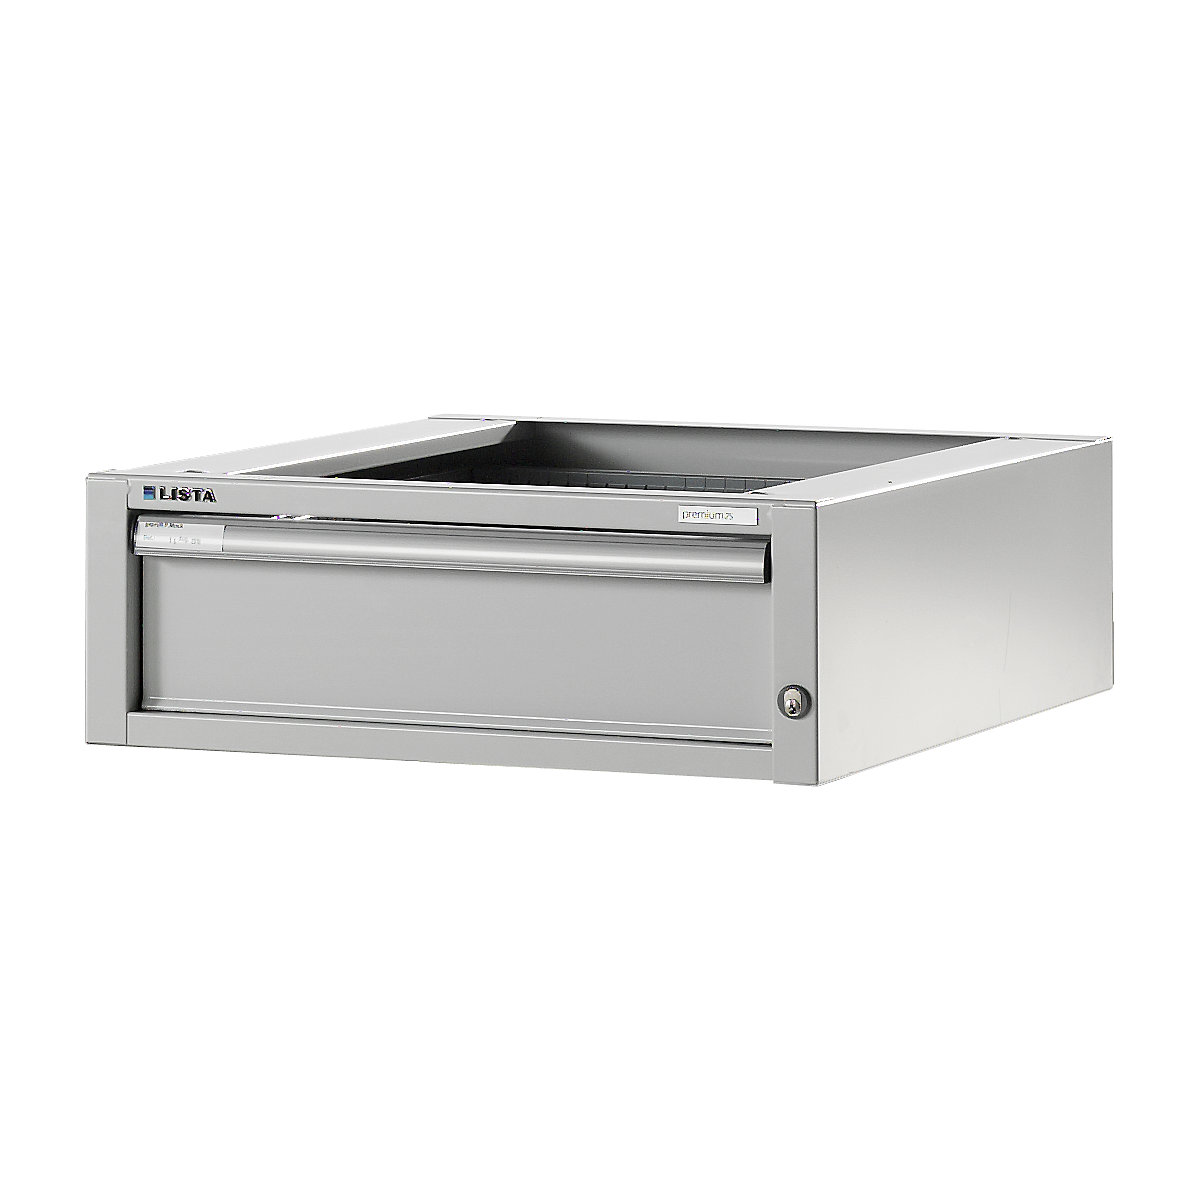 Modular workbench system, drawer unit - LISTA